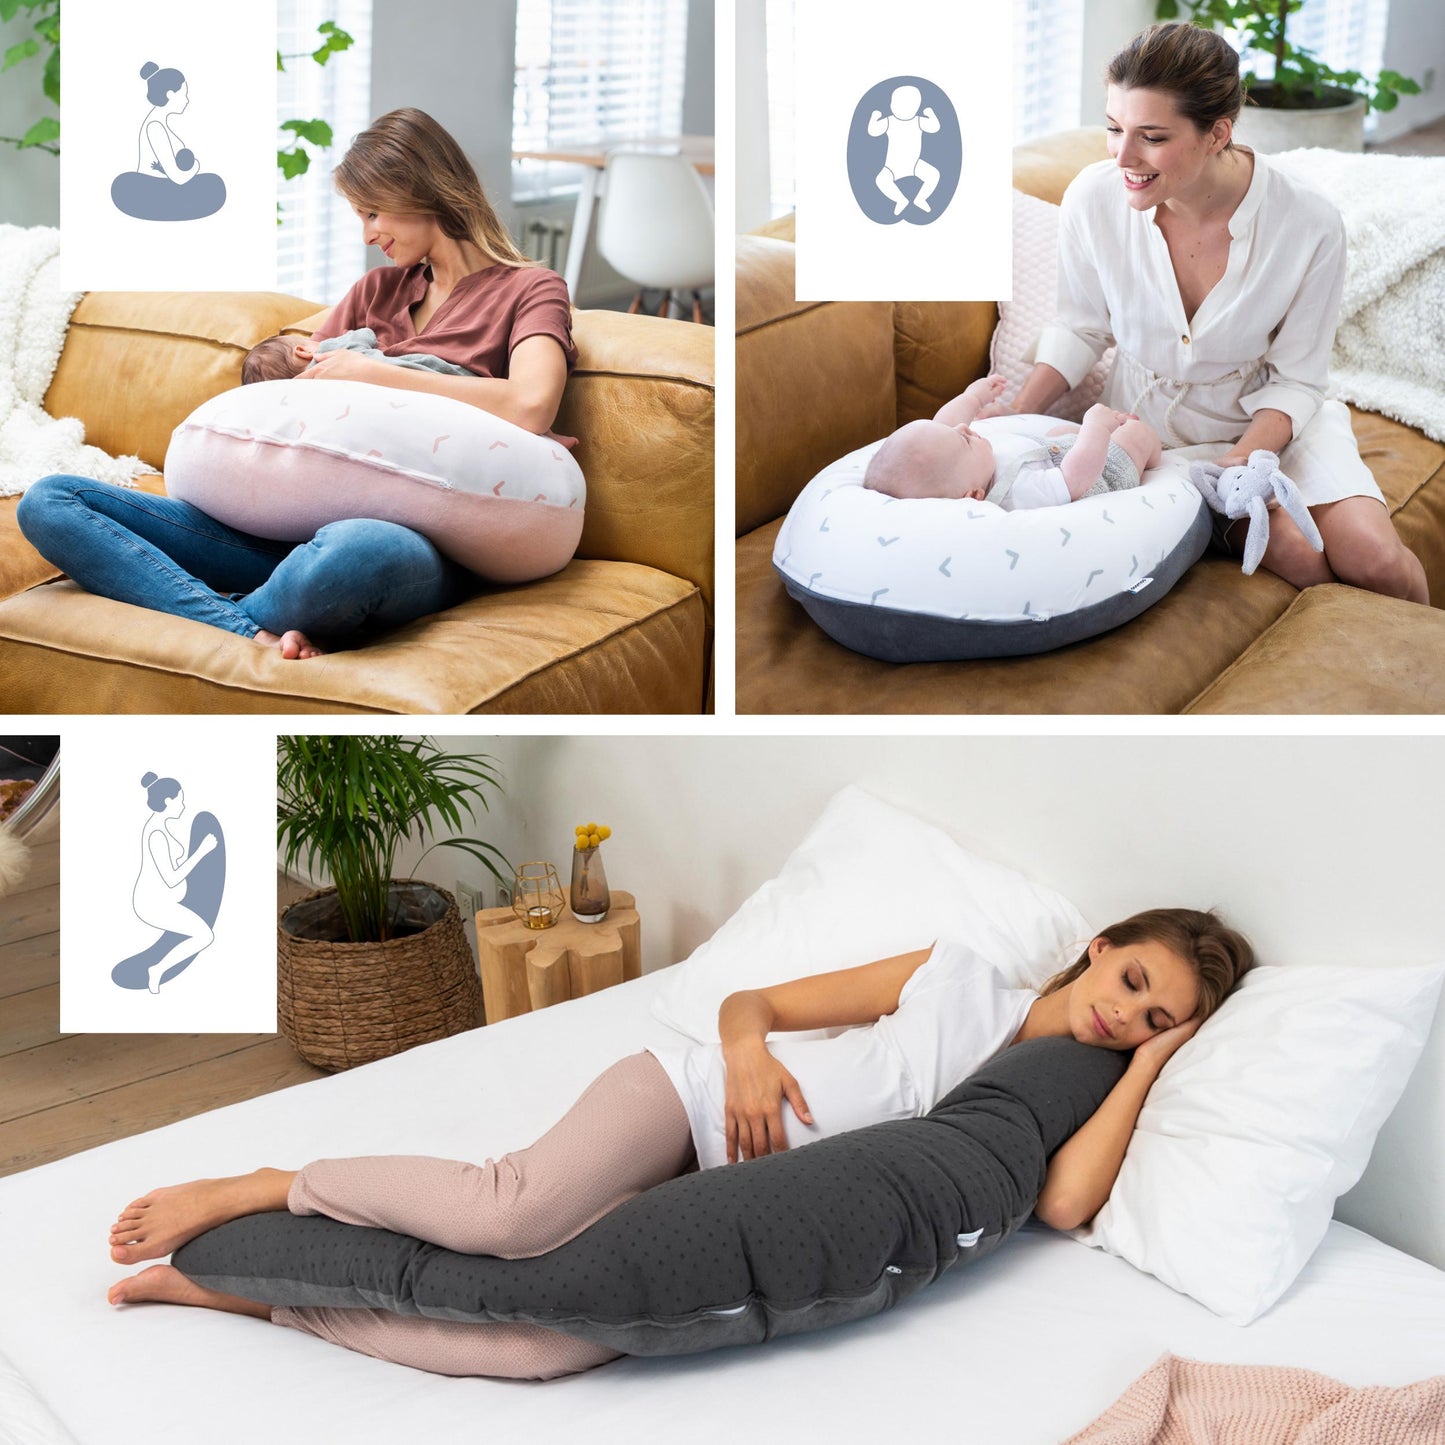 Buddy Classic Pregnancy & Nursing Pillow - Light Grey